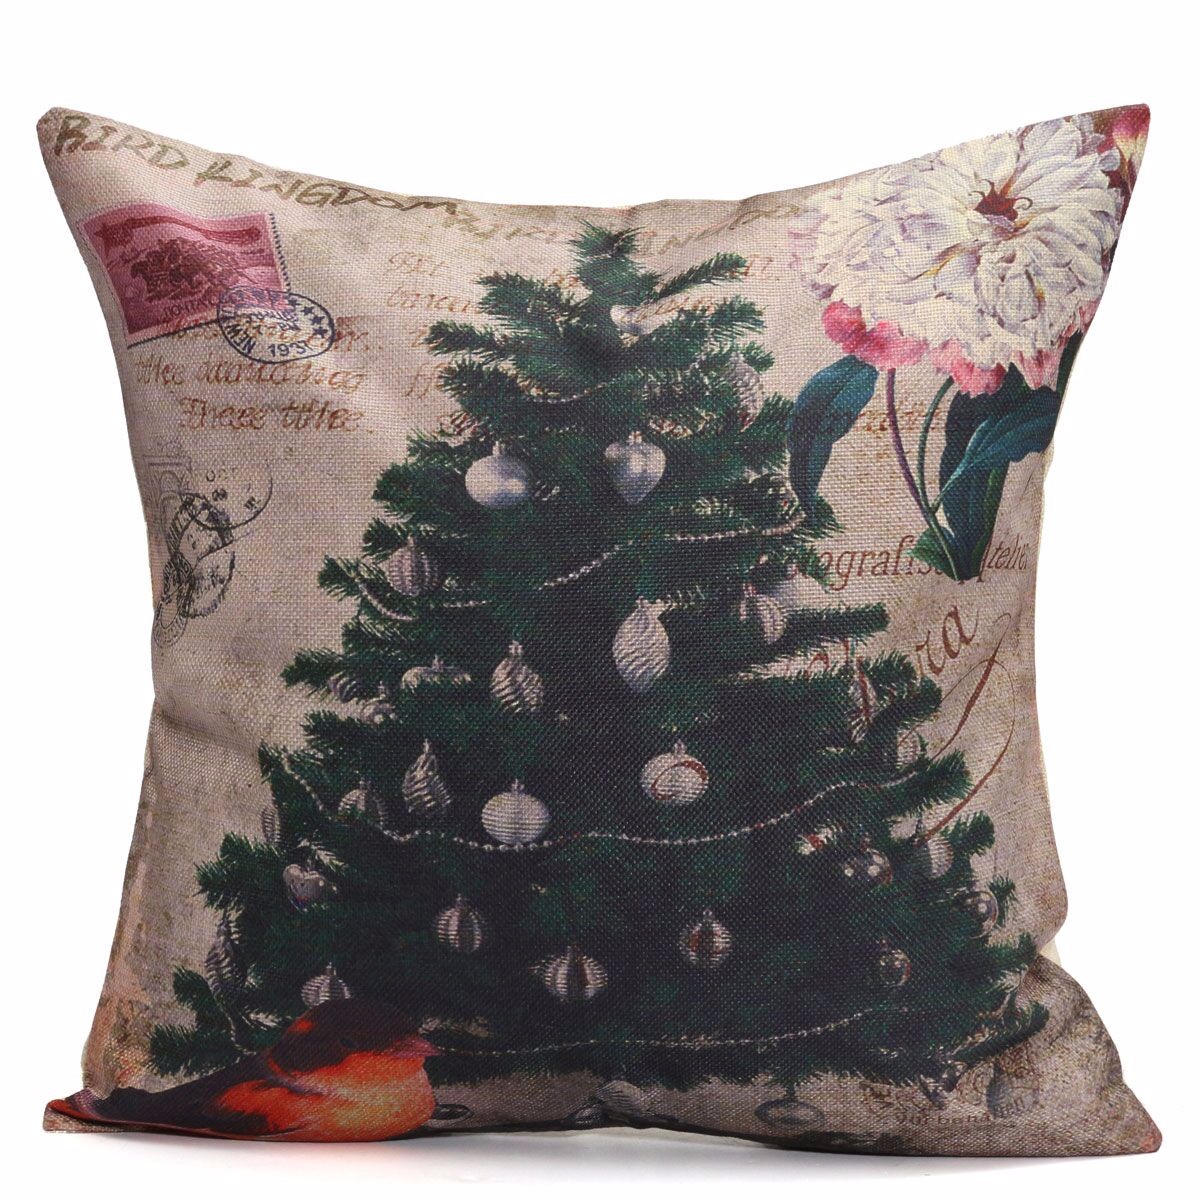 43X43cm-Christmas-Tree-Snowmen-Gift-Fashion-Cotton-Linen-Pillow-Case-Santa-Claus-Home-Decor-1097934